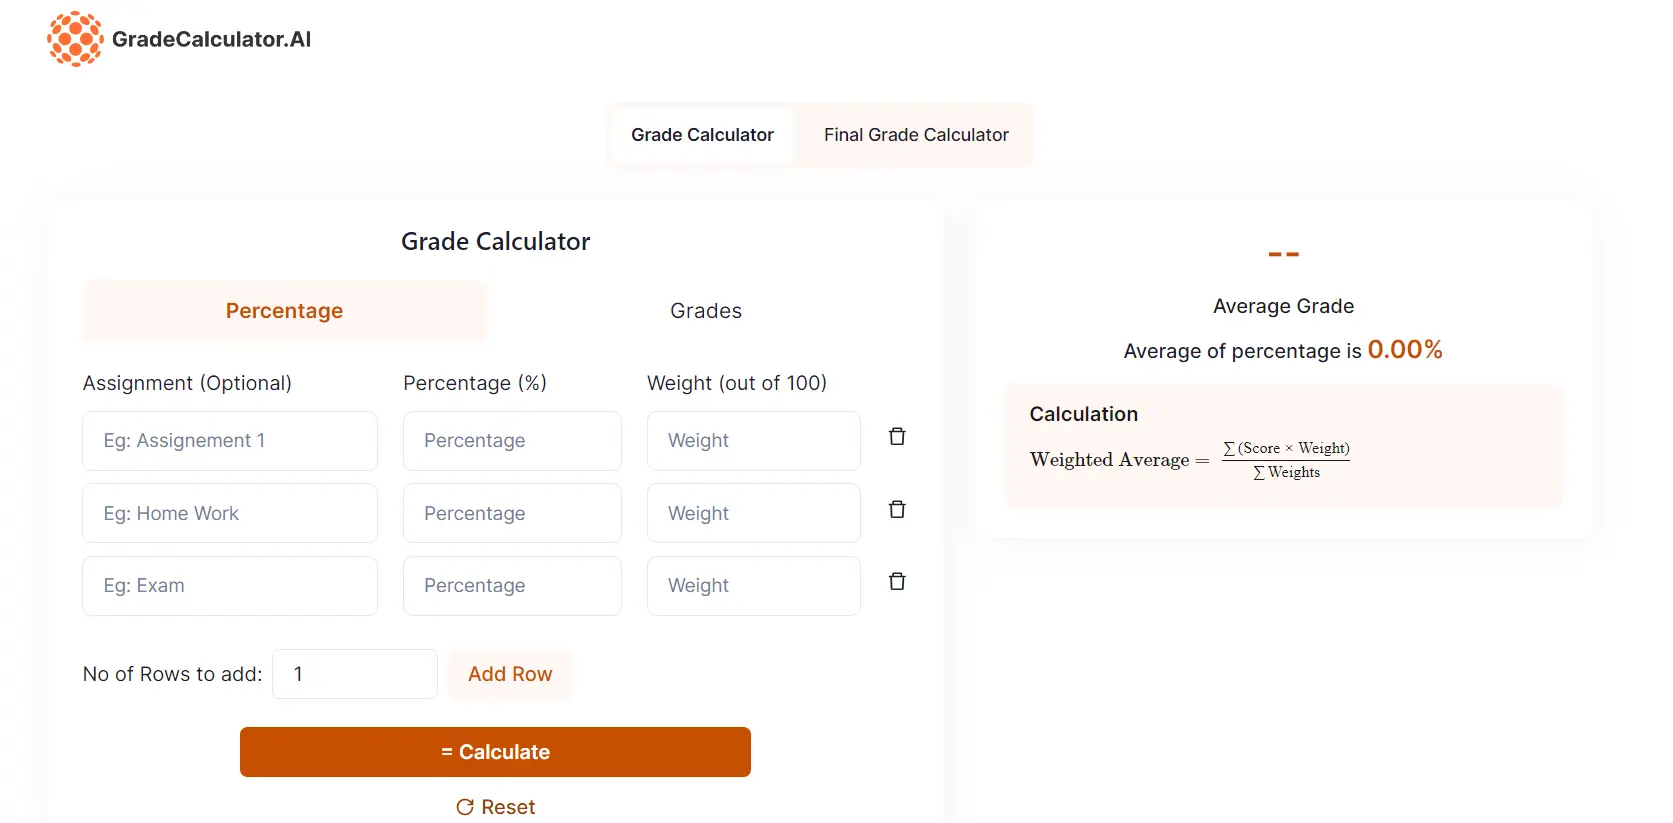 Grade Calculator AIwebsite picture